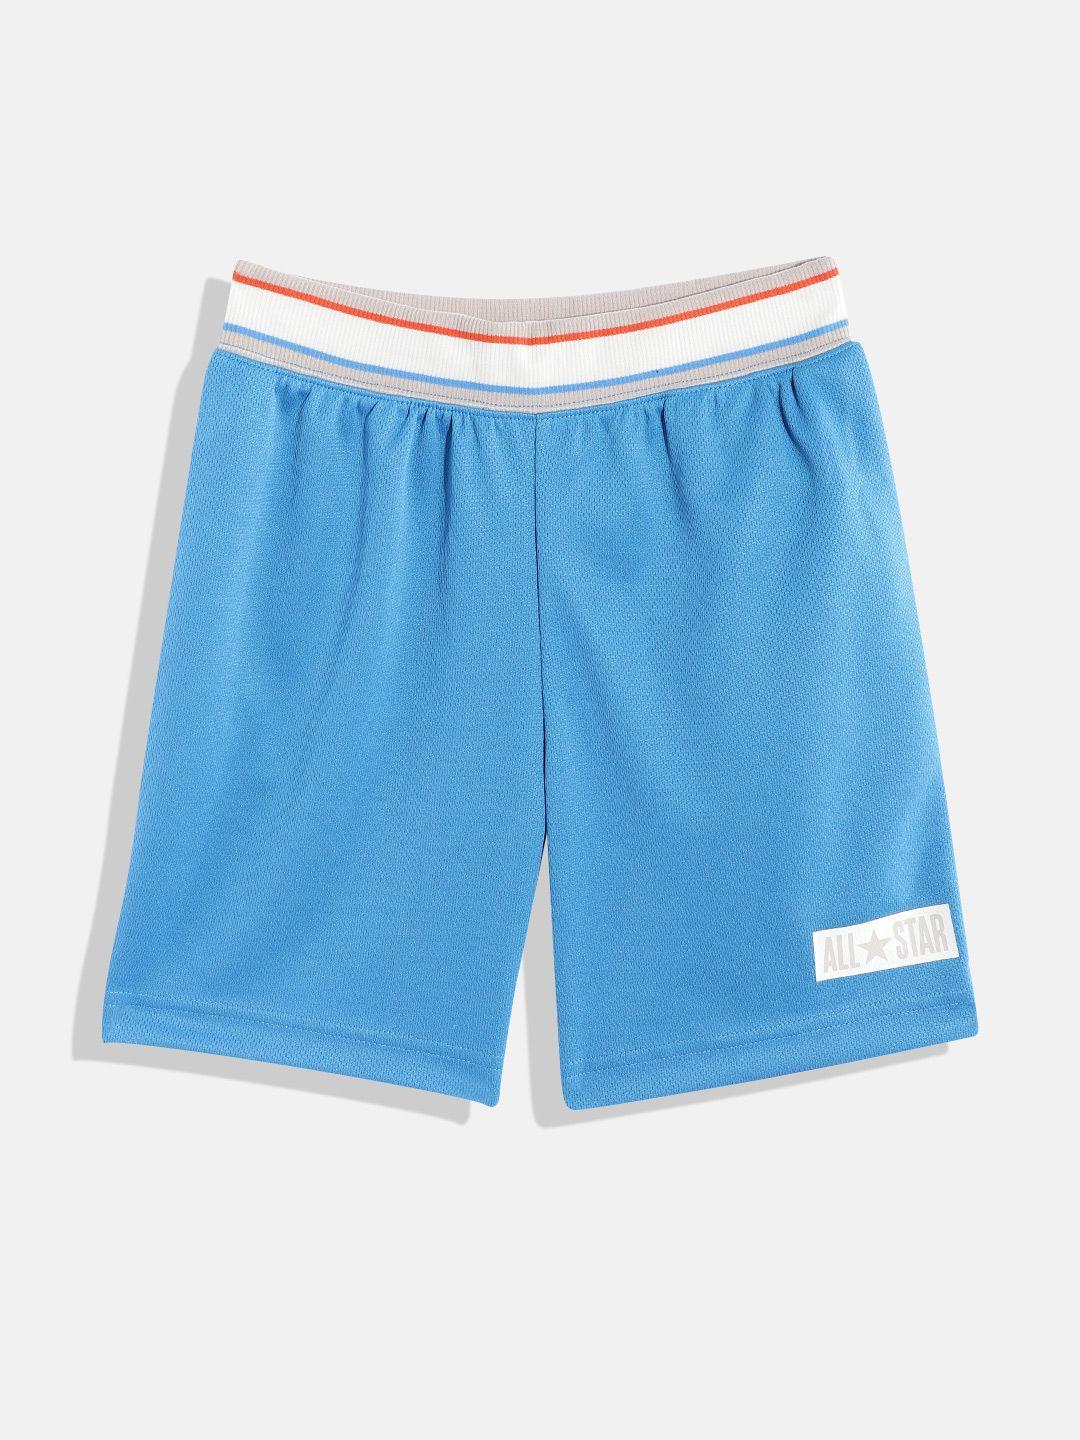 converse-boys-blue-shorts